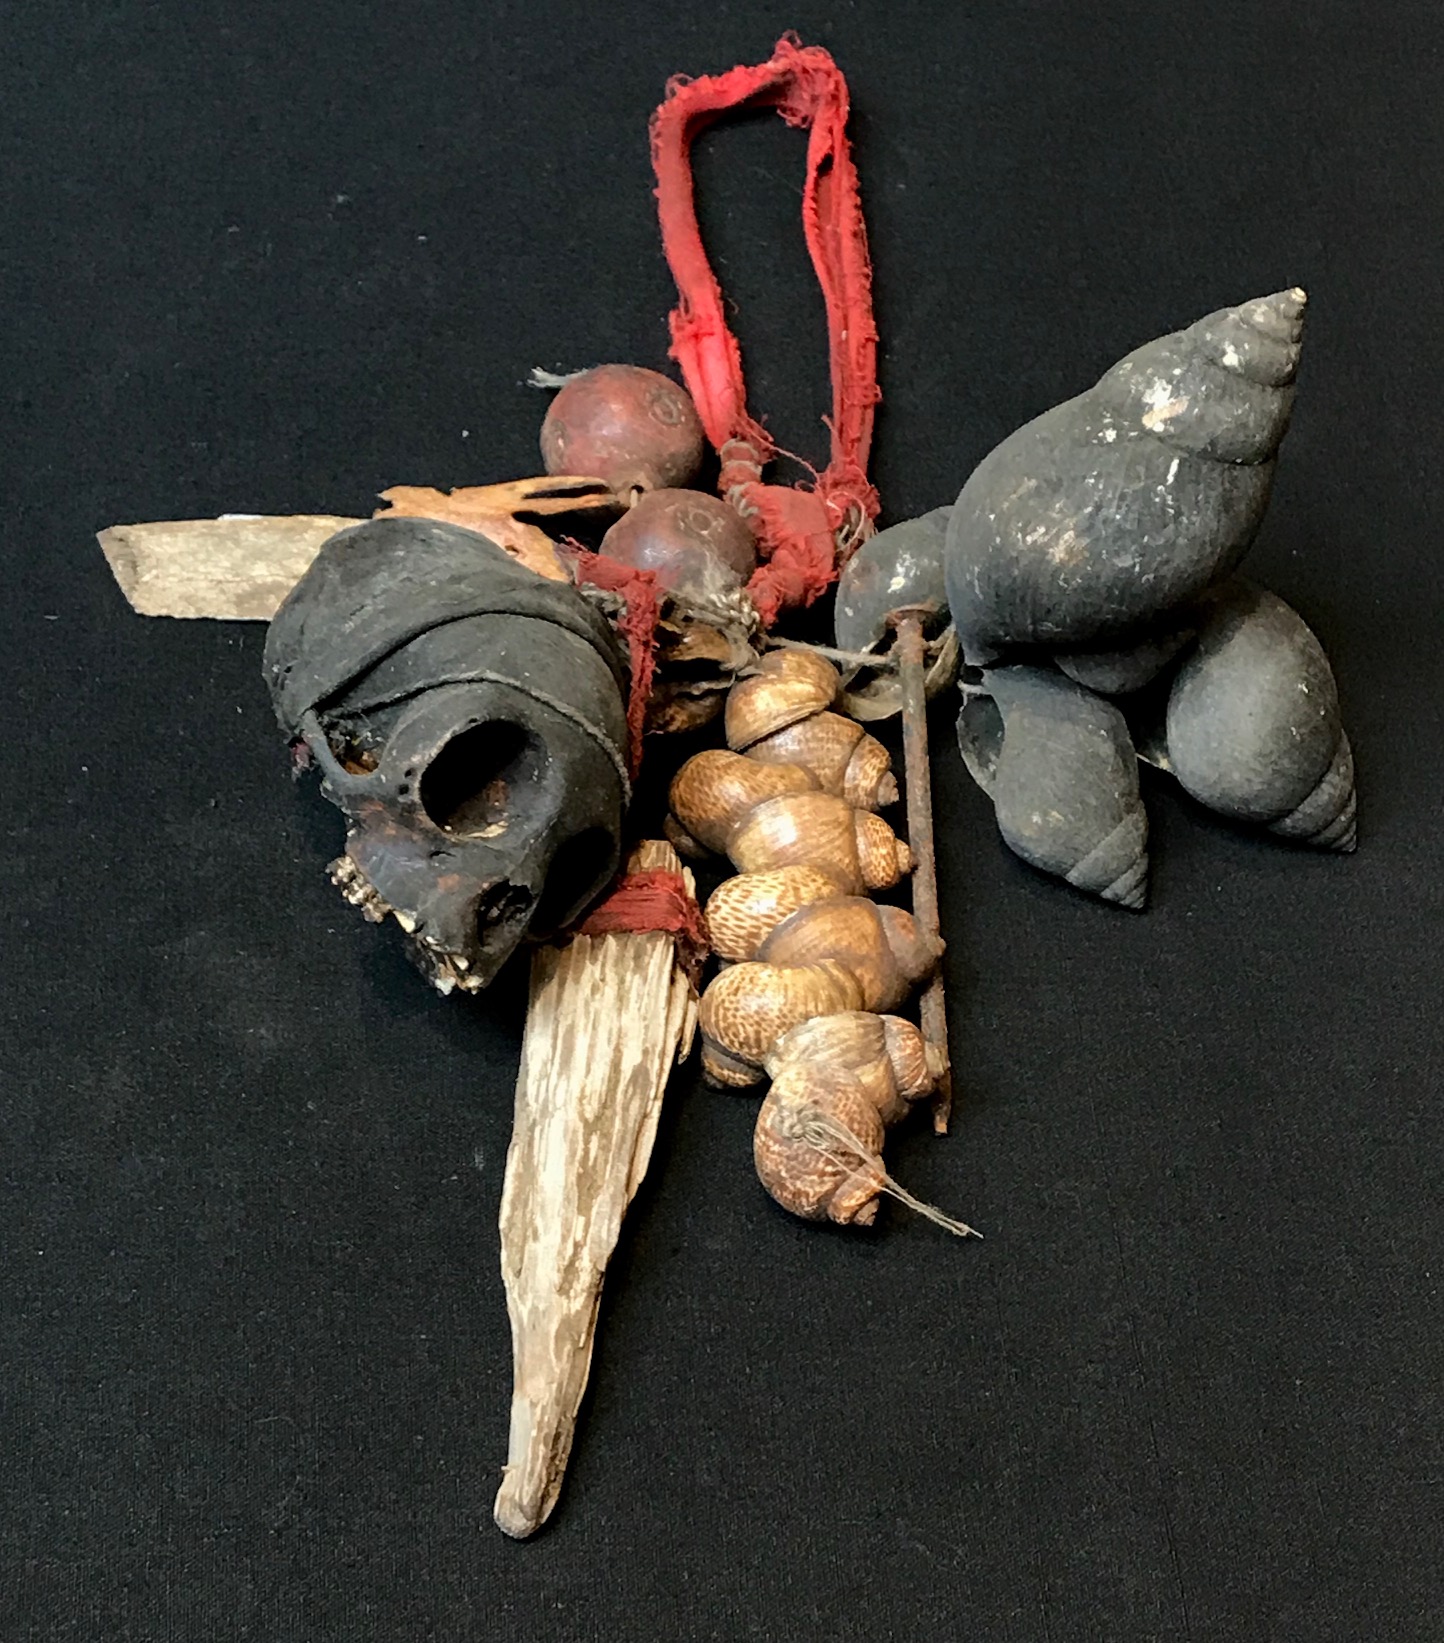 Shaman's ritual dance rattle, Indonesia, Borneo, Dayak tribe, early 20th c., Monkey skull, sea shells, metal nail, ceramic beads, glass bead, Shaken to scare away evil or harmful spirits, 12" x 7" 